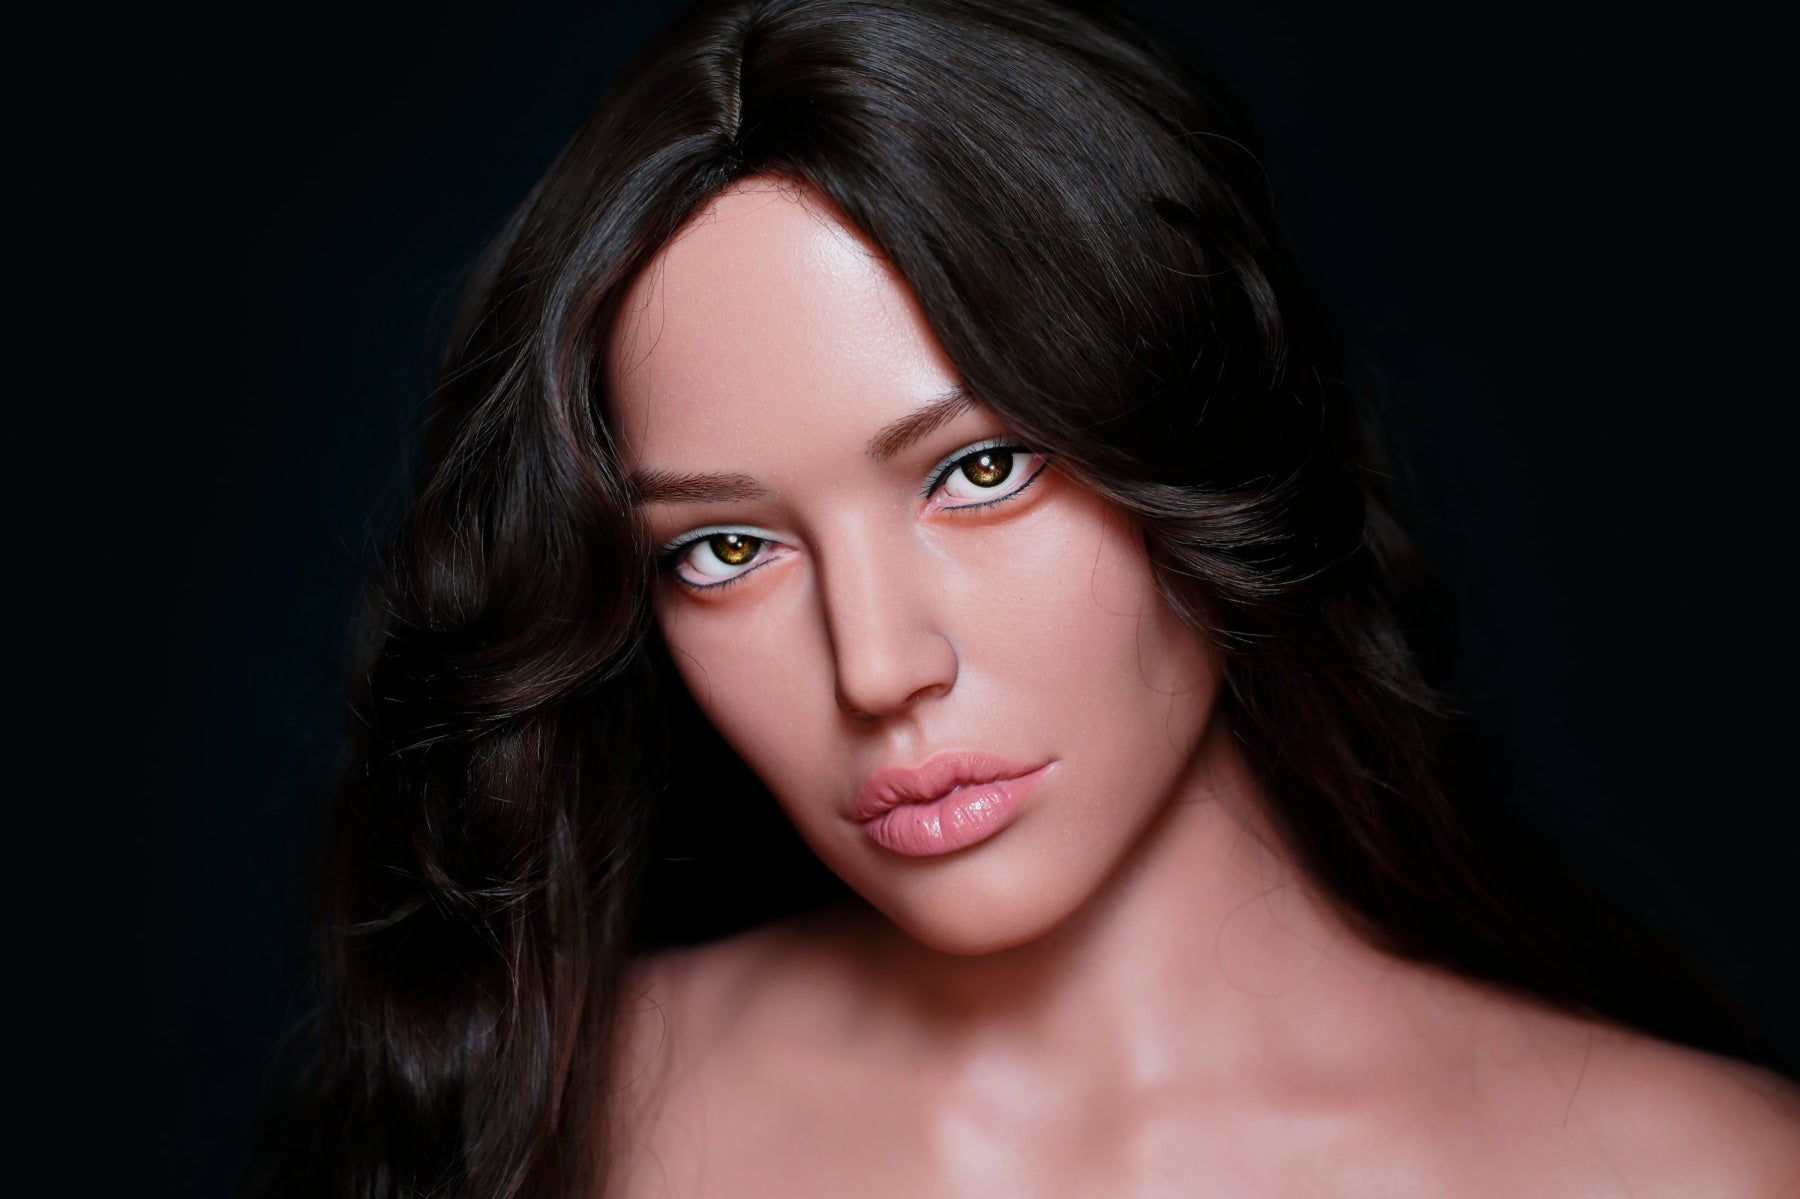 Karina Premium Realistic Silicone Sex Doll - GE55_3 - Zelex Inspiration Series ZELEX®